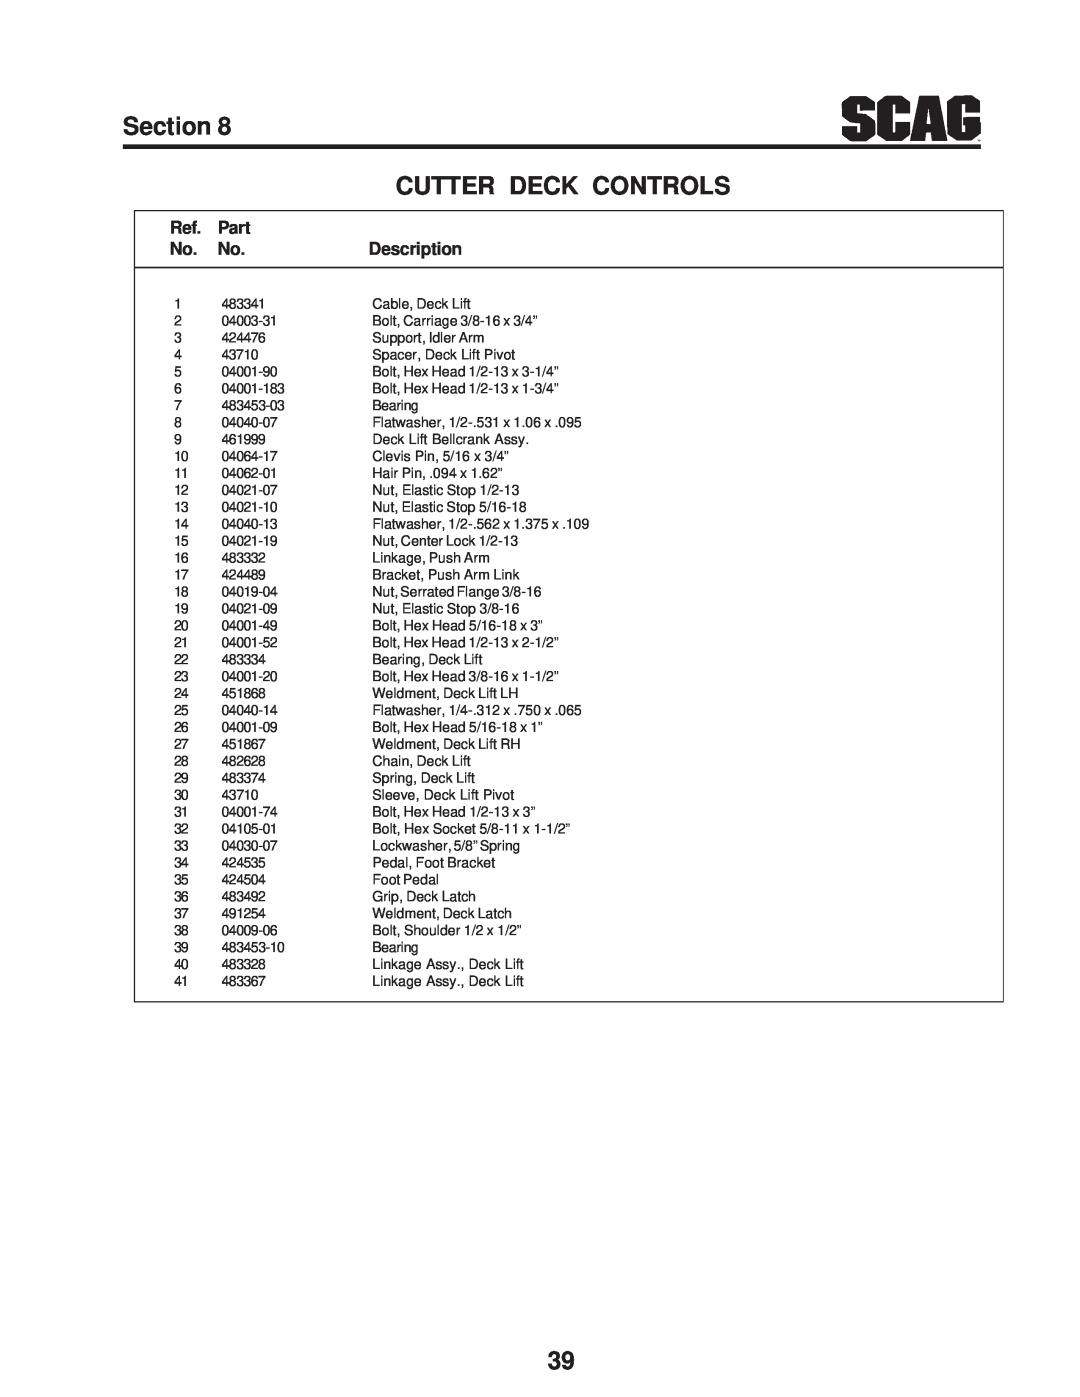 Scag Power Equipment SFZ manual Section, Cutter Deck Controls, Part, Description 